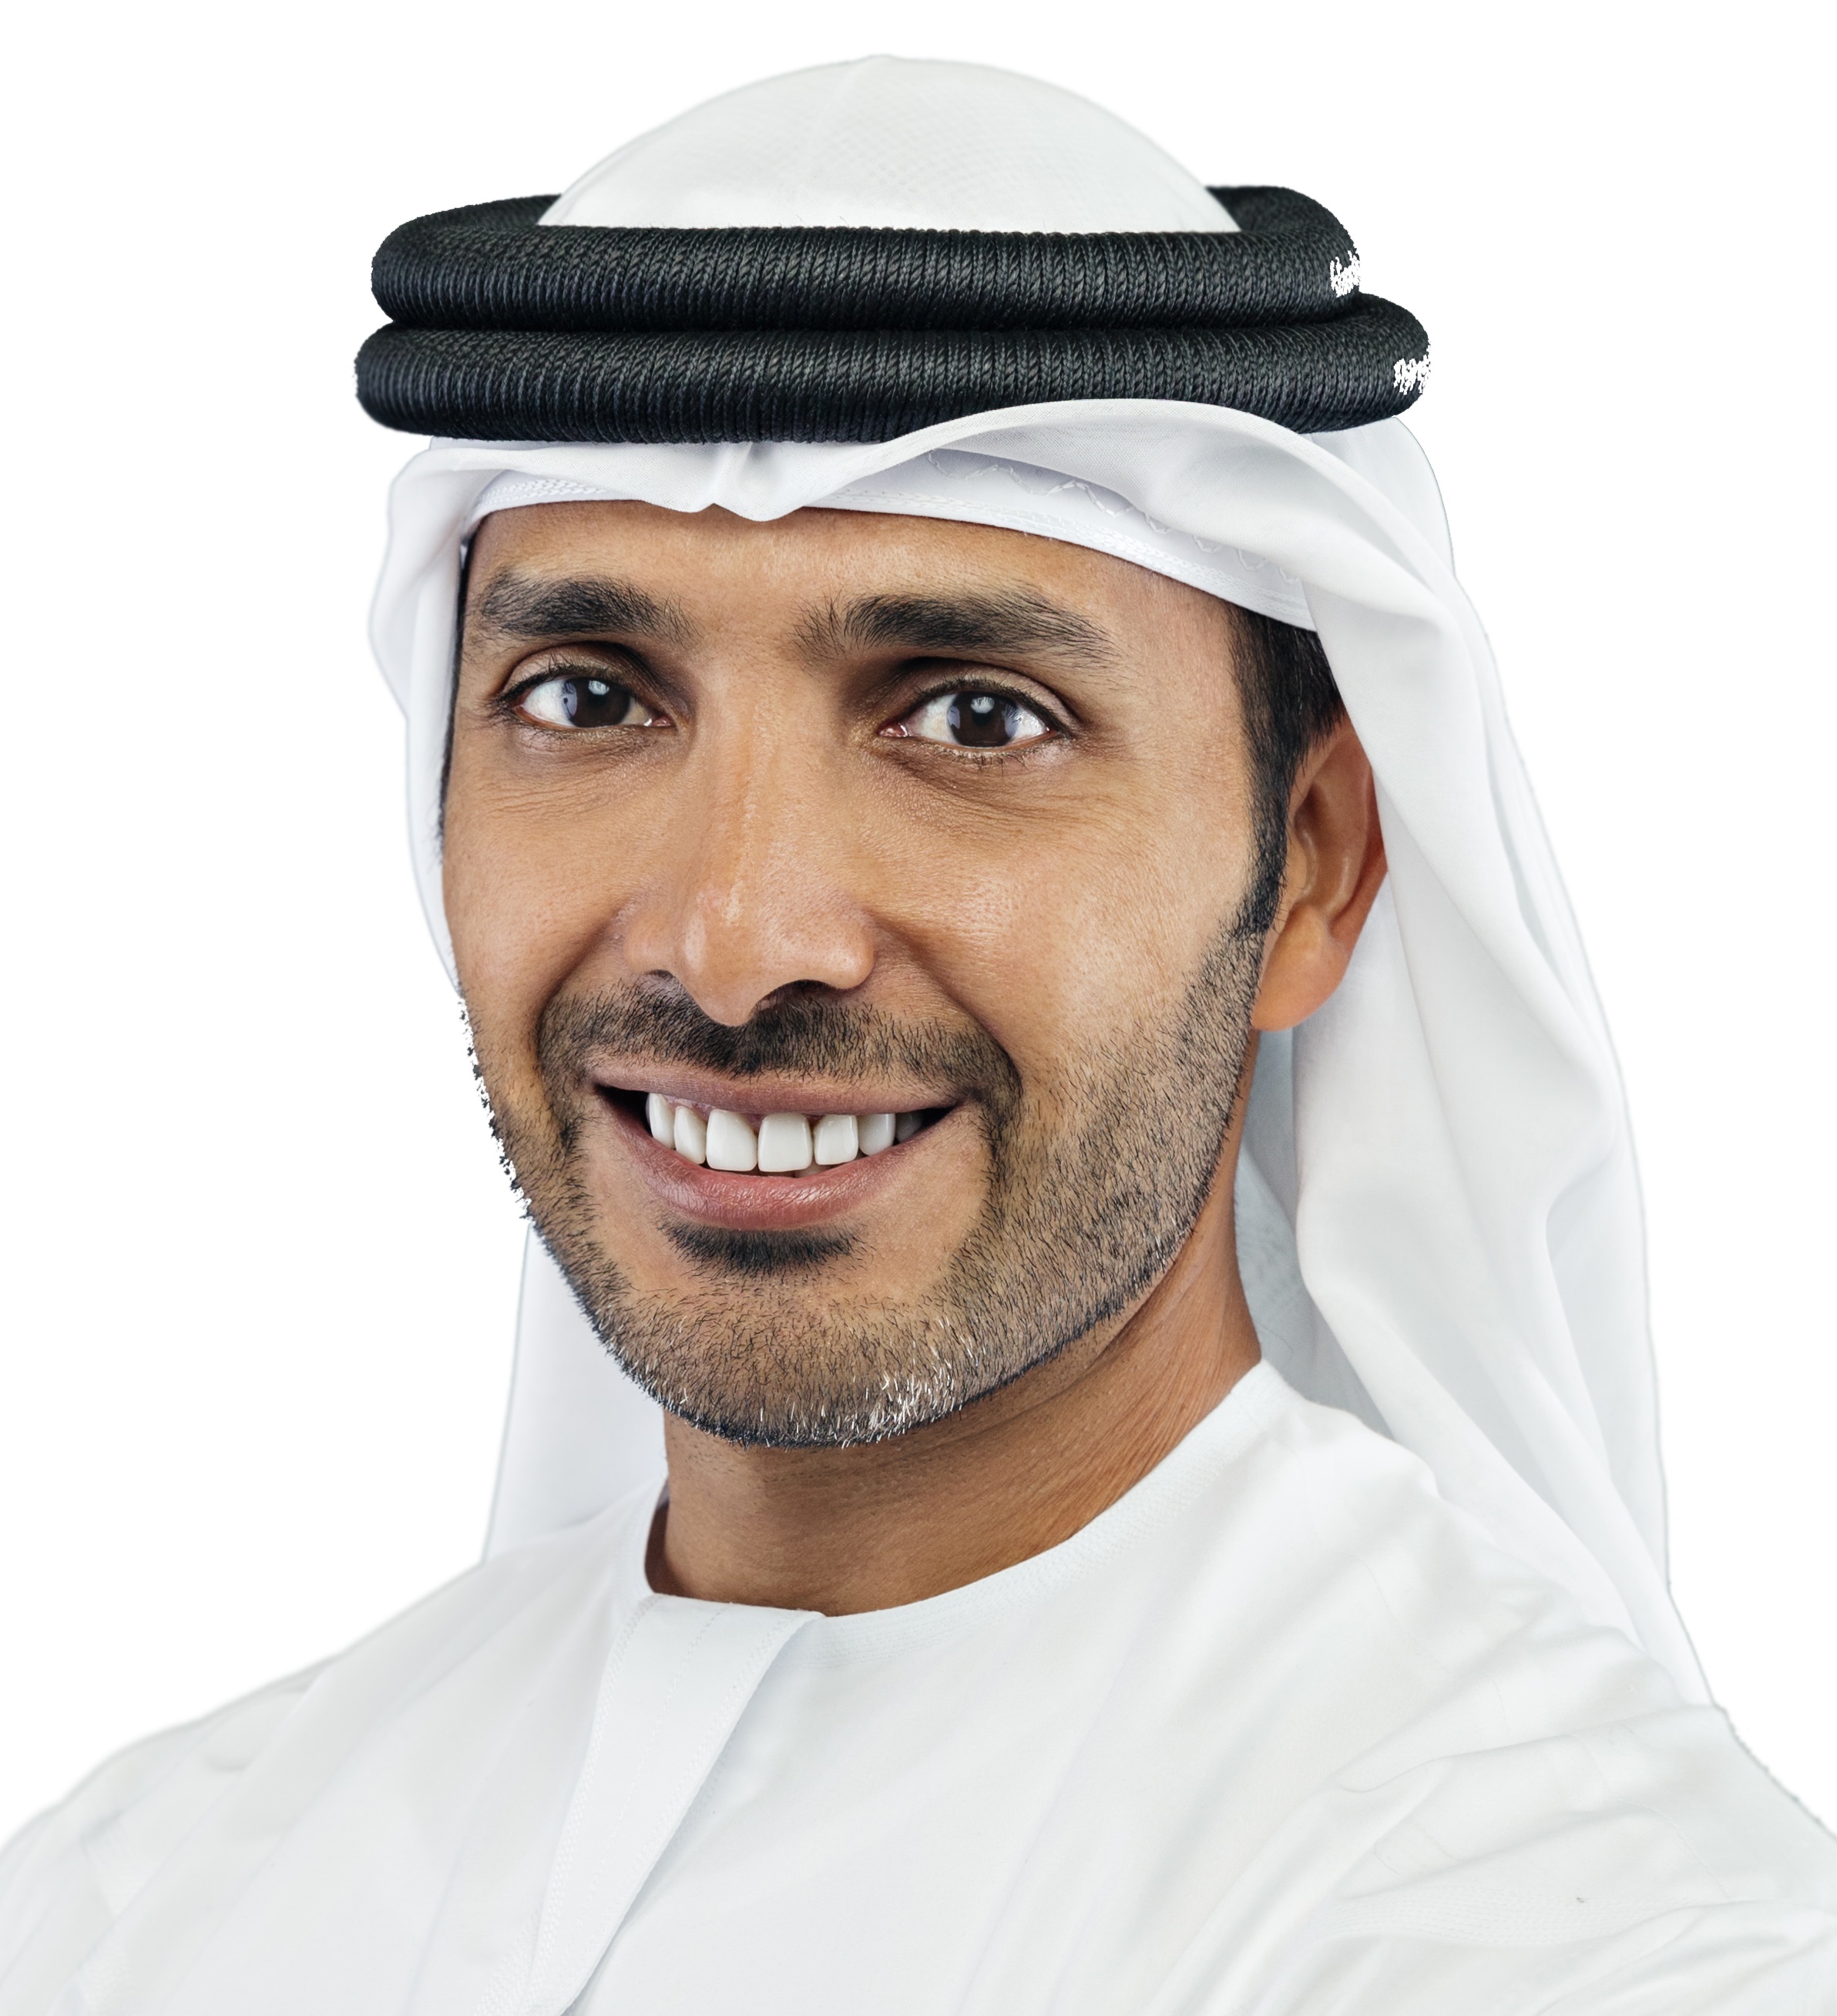 Khaled Abdulla Al Qubaisi